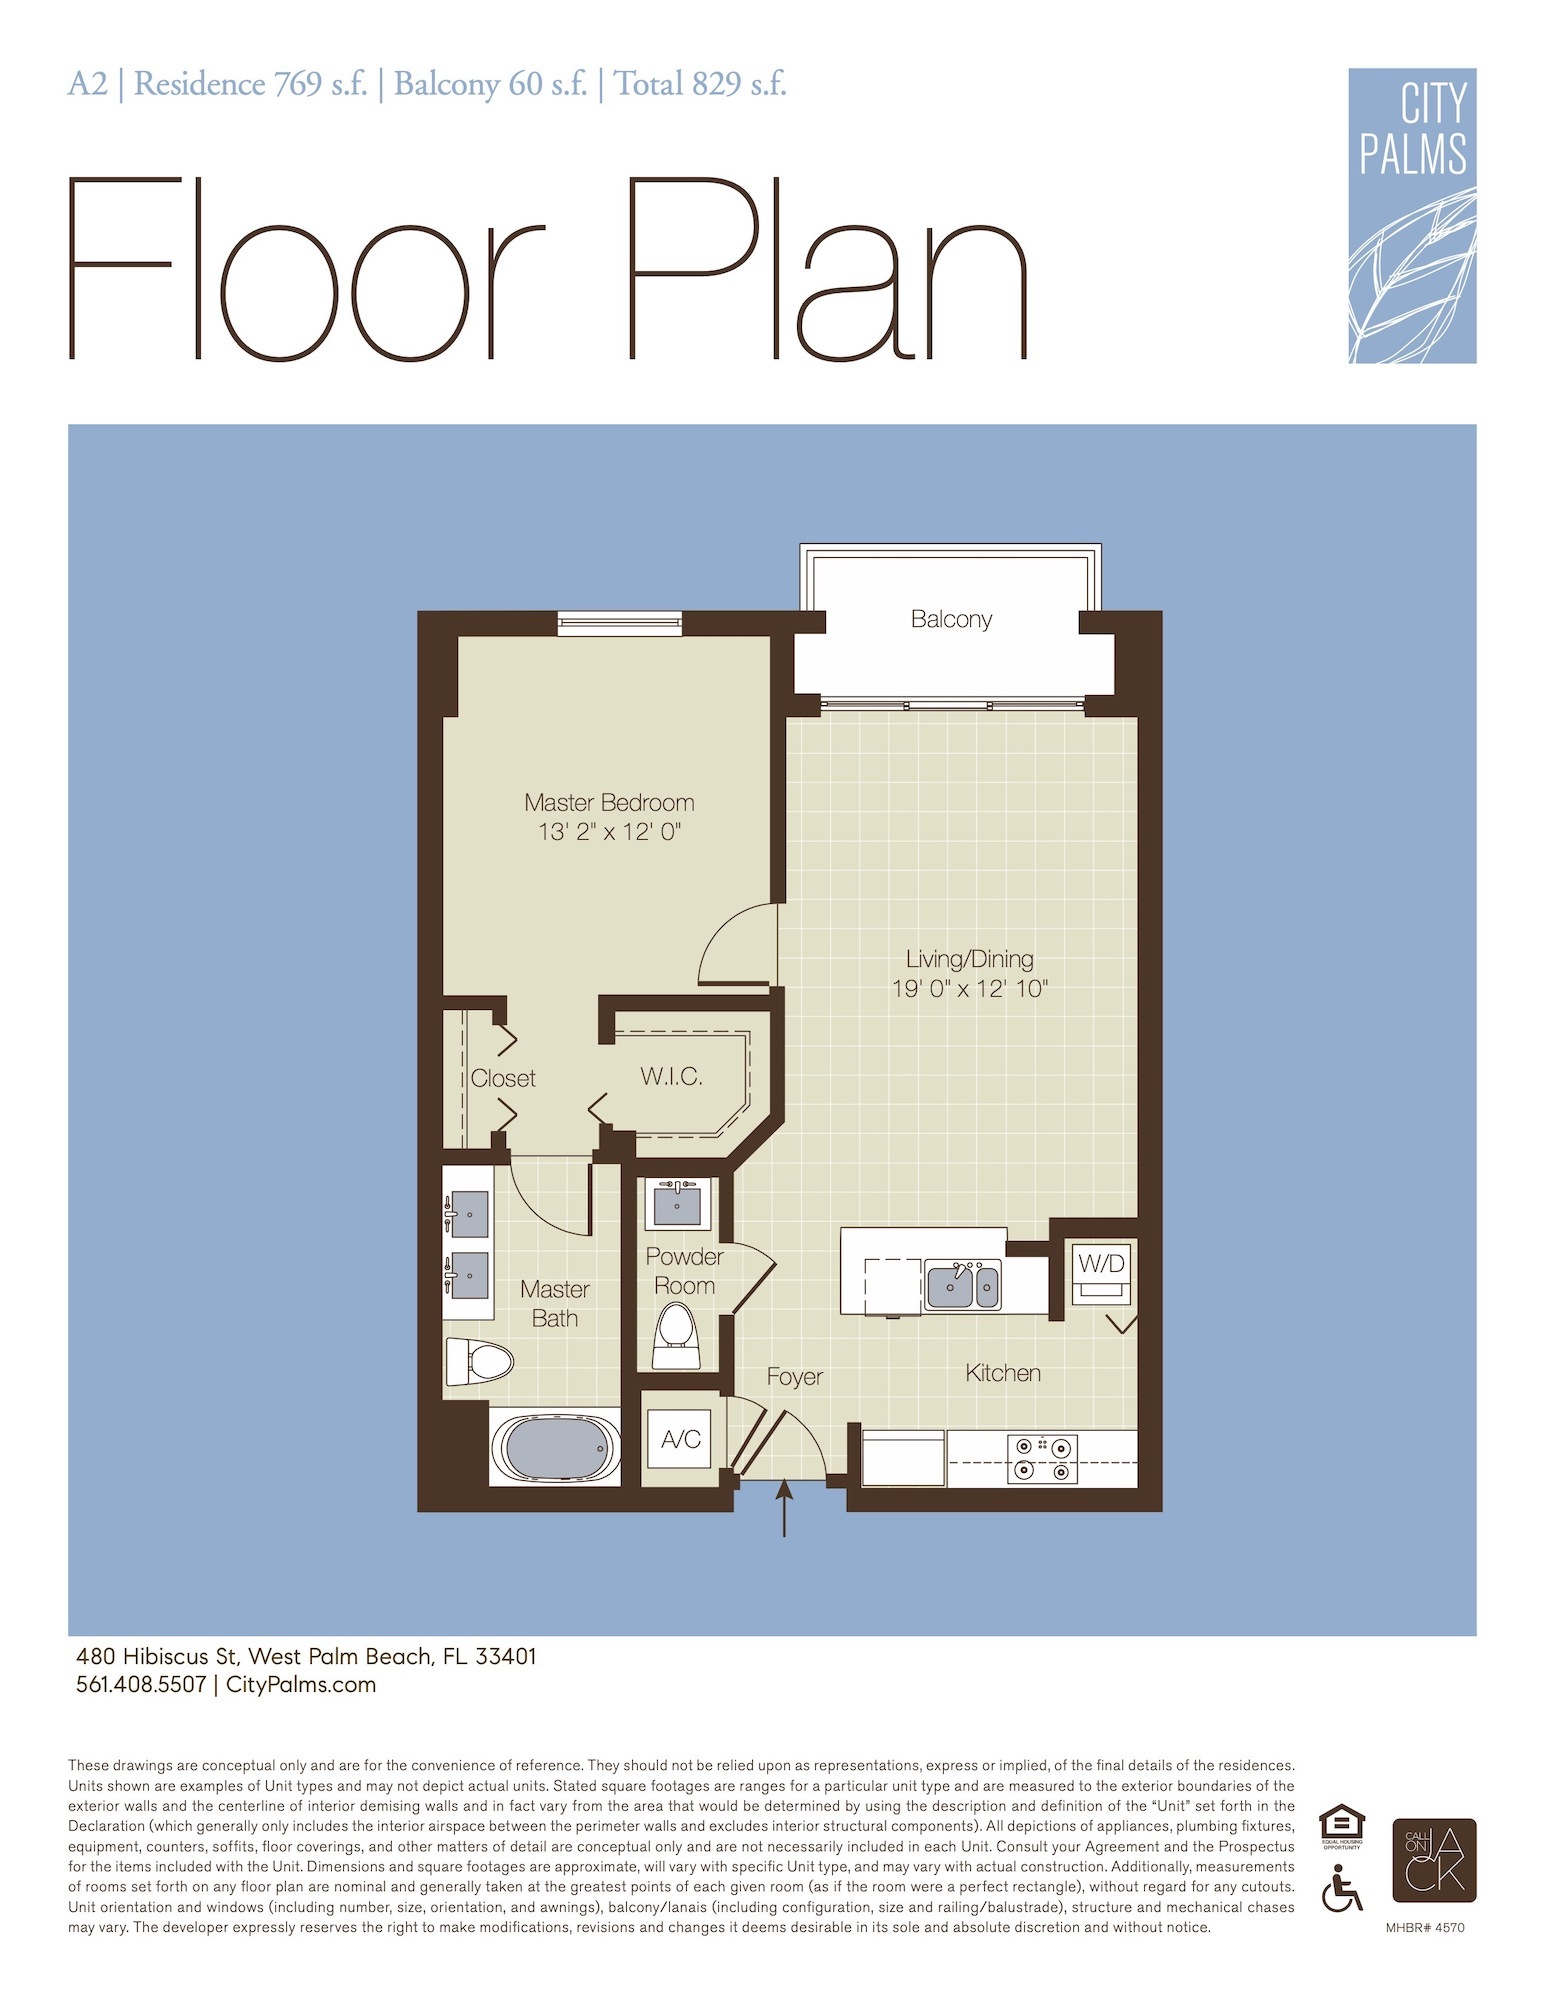 Floor Plan for City Palms Floorplans, A2